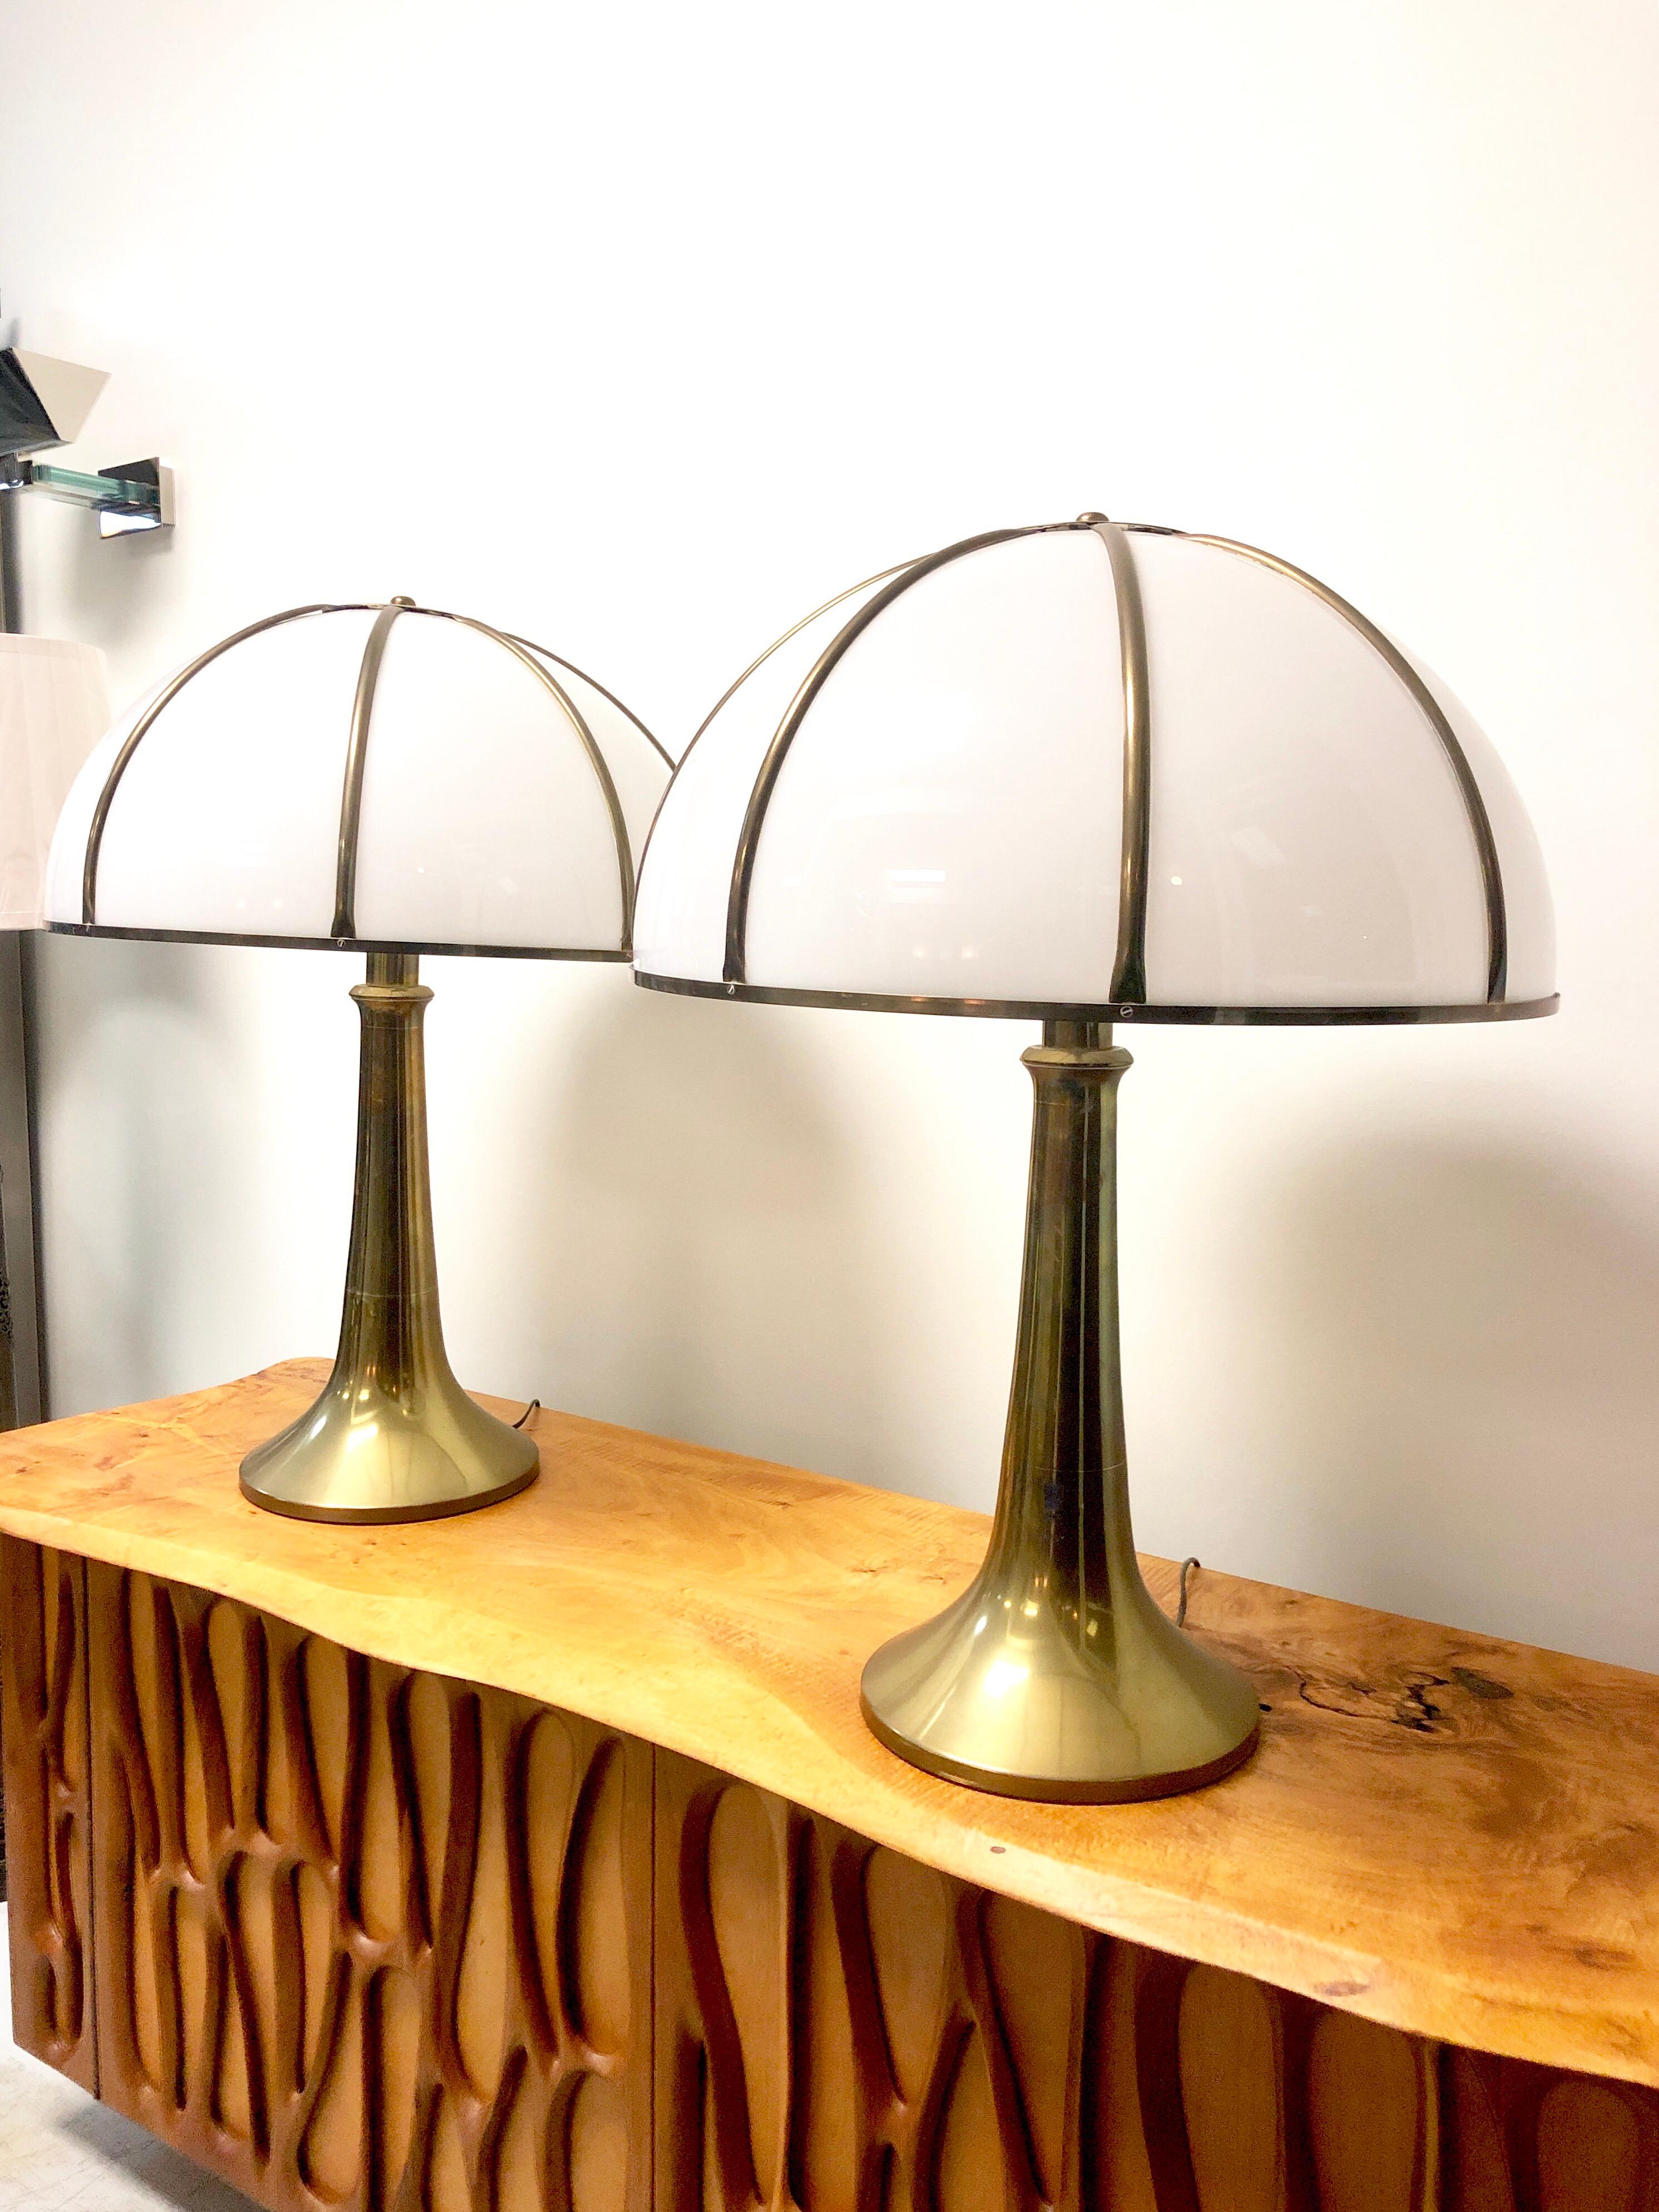 Italian Gabriella Crespi Pair of Fungo Brass and Plexiglass Table Lamps, 1970